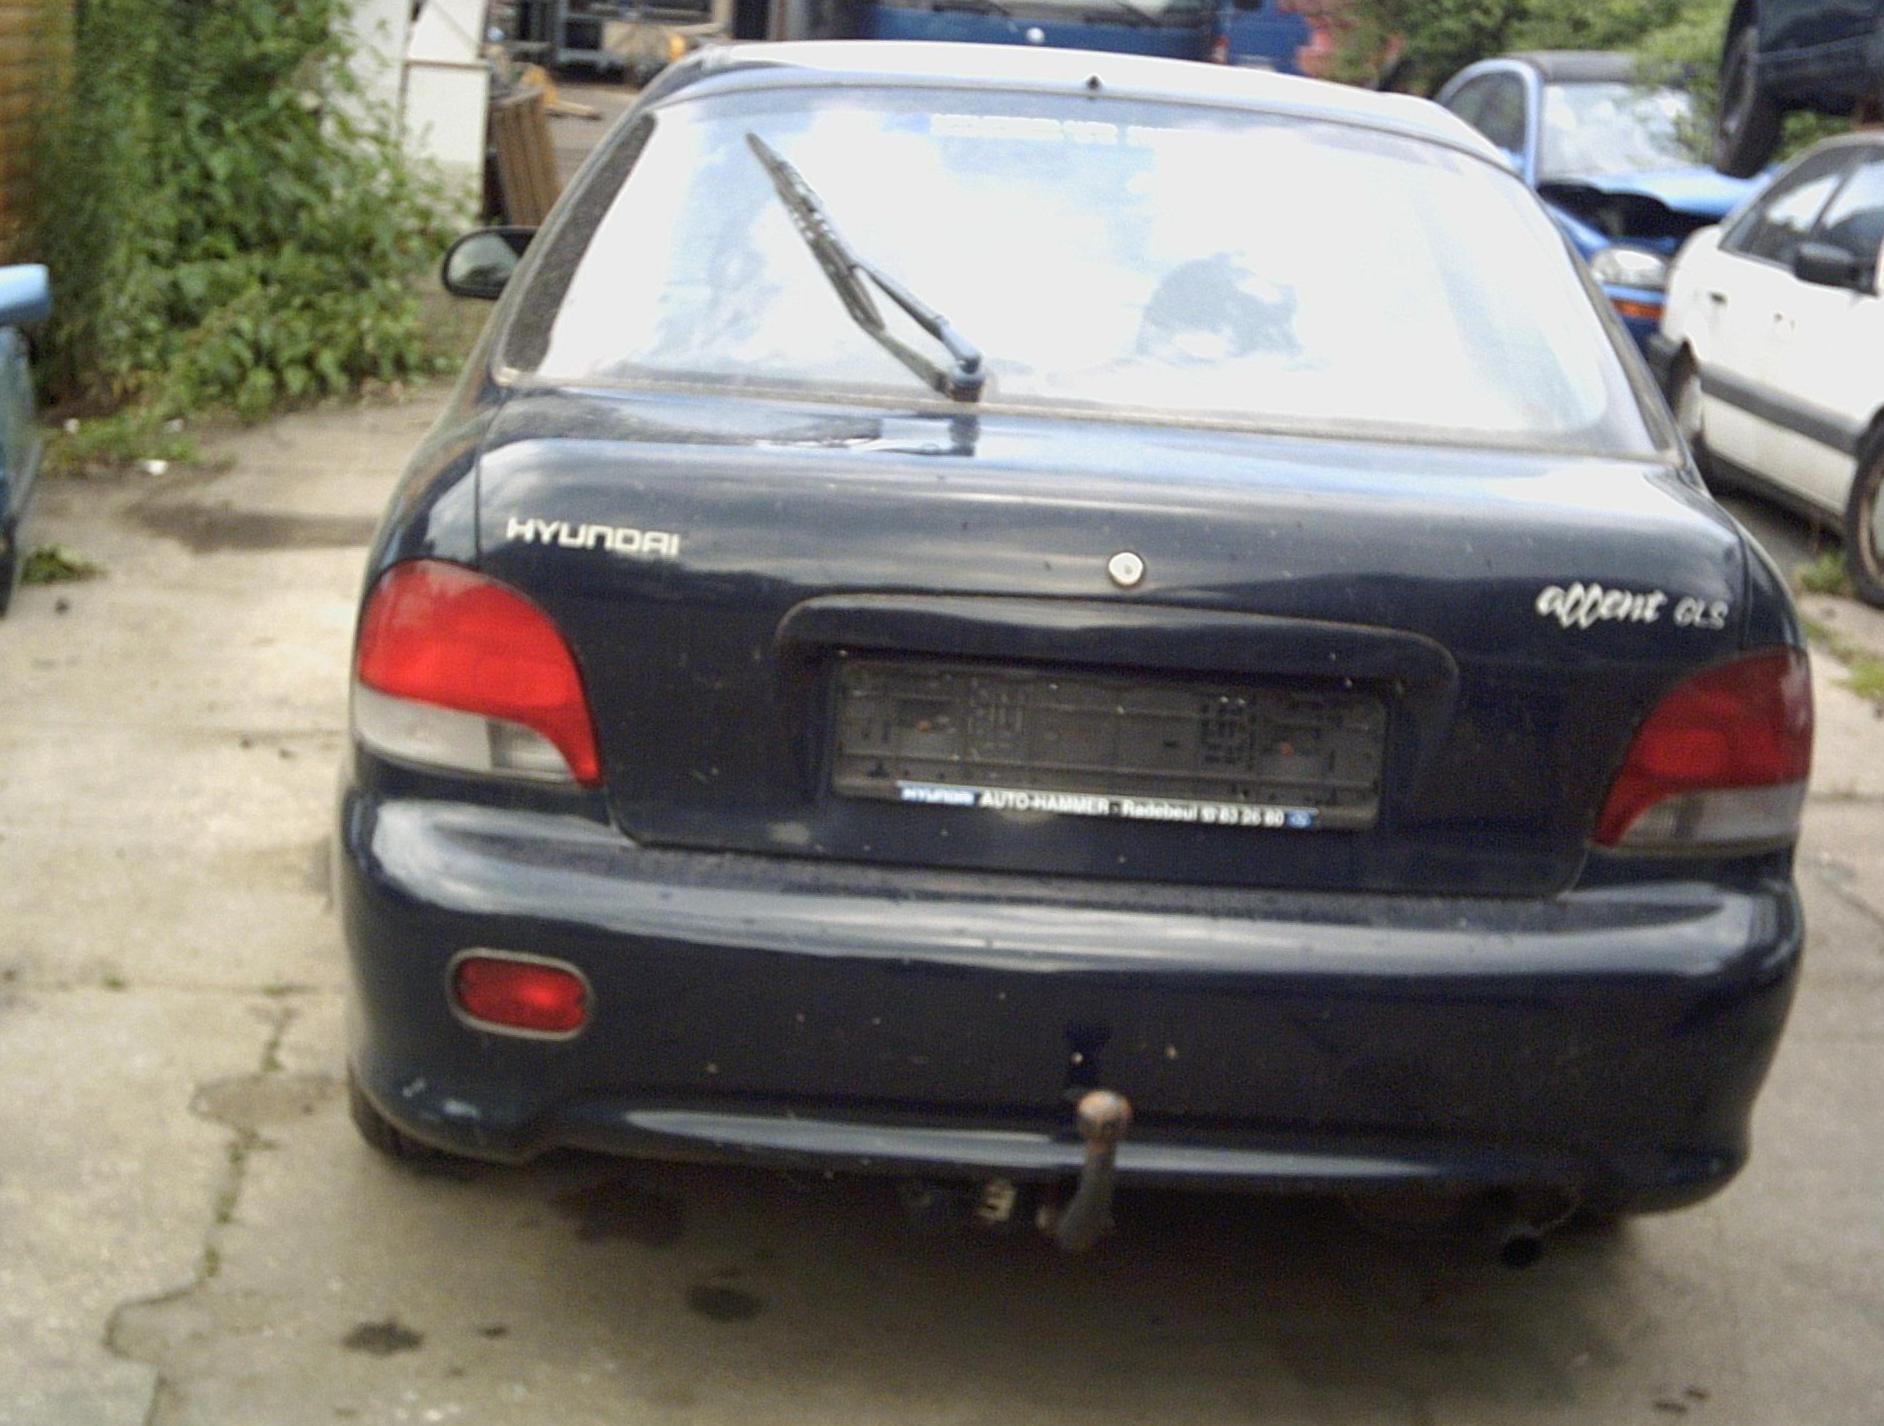 Hyundai Accent Hatchback for sale 2011